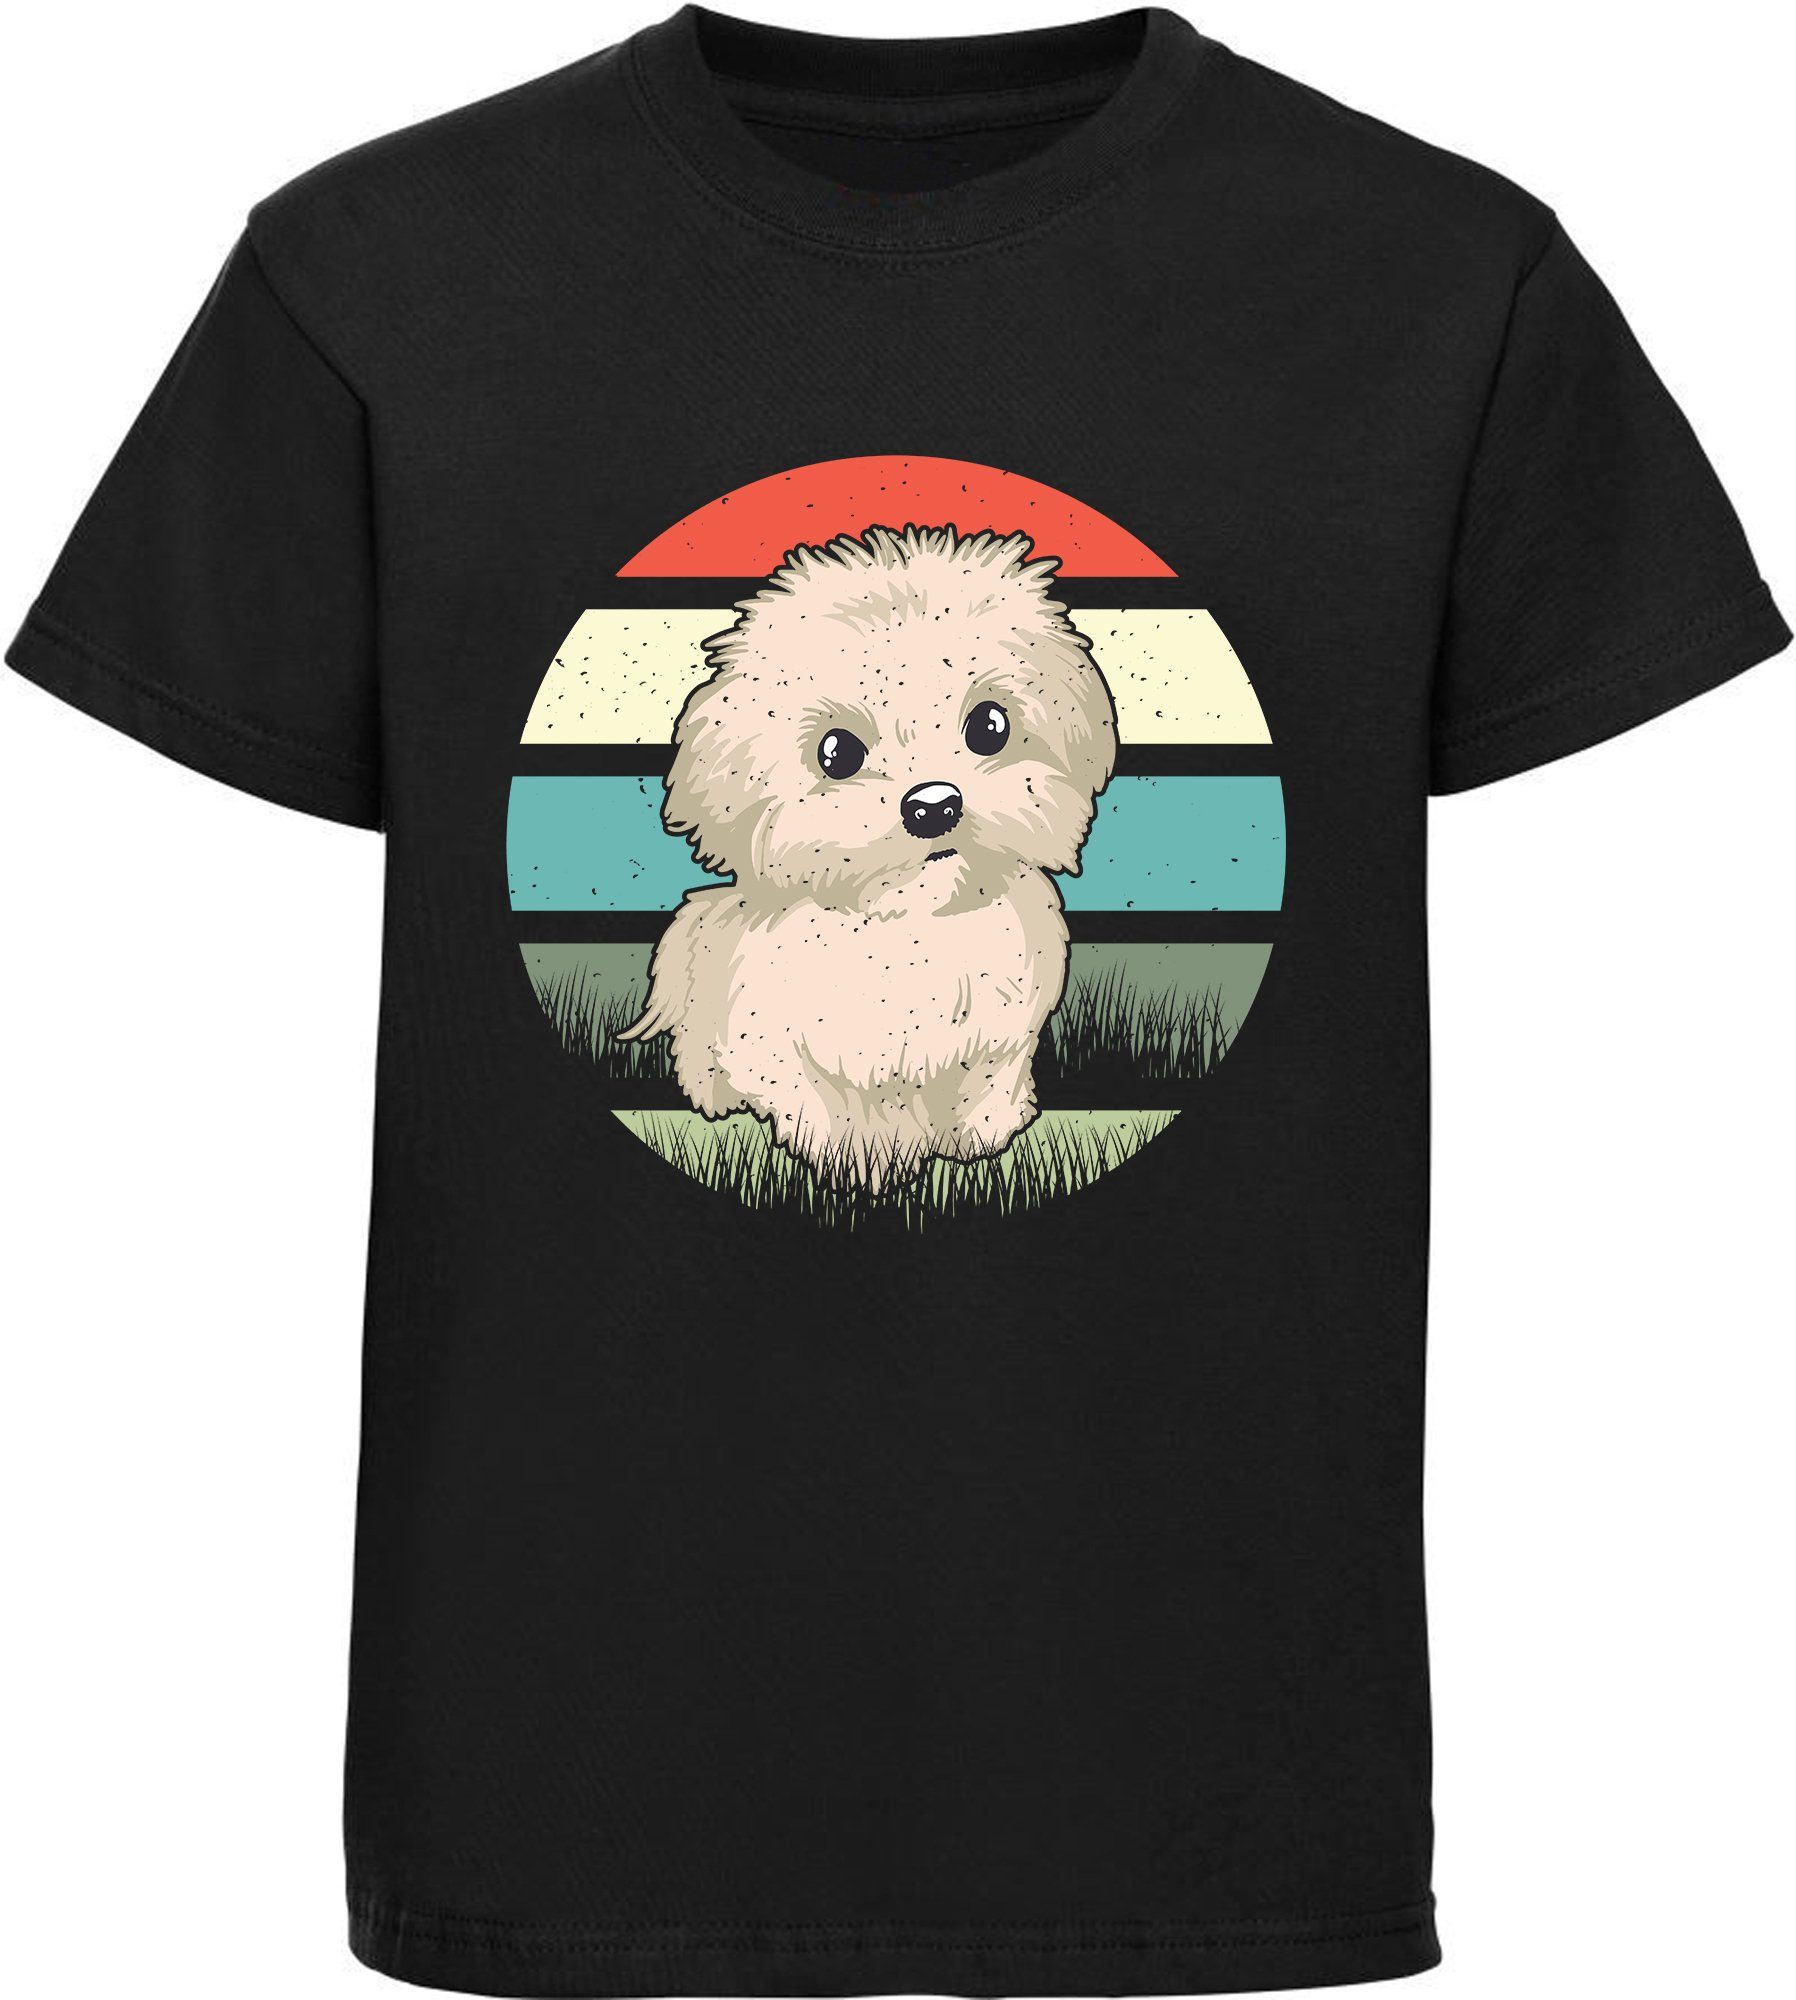 MyDesign24 Print-Shirt Kinder Hunde T-Shirt bedruckt - Retro Malteser Welpen Baumwollshirt mit Aufdruck, i242 schwarz